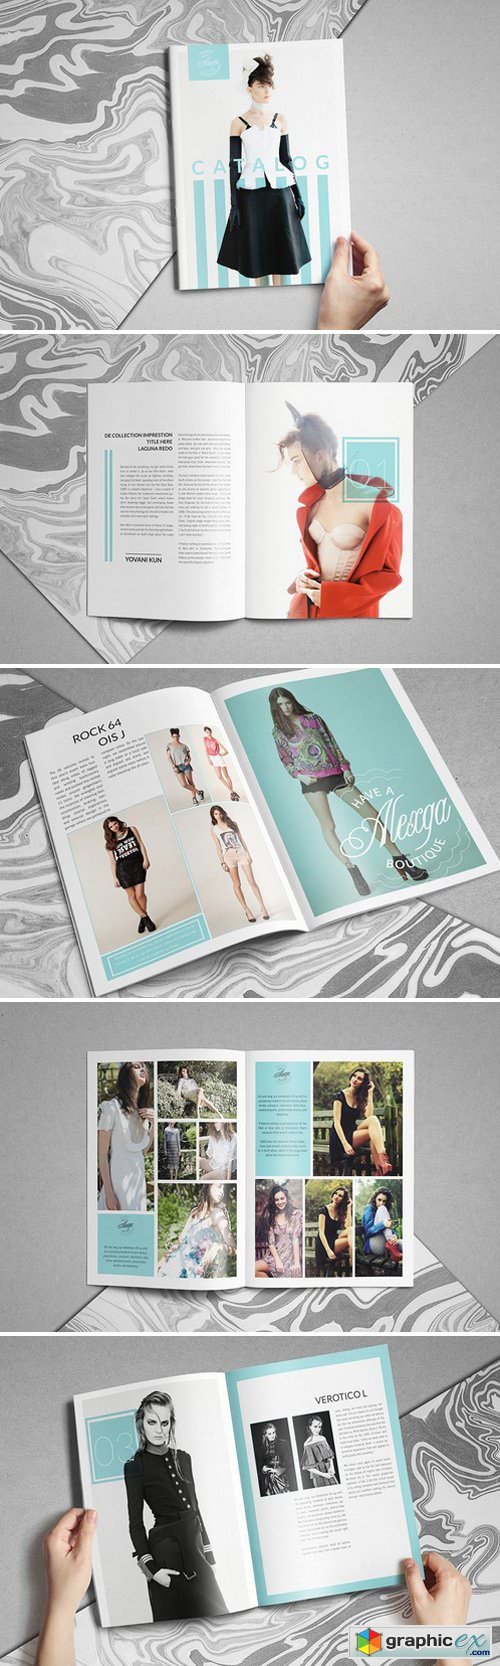 lookbook fashion catalog  u00bb free download vector stock